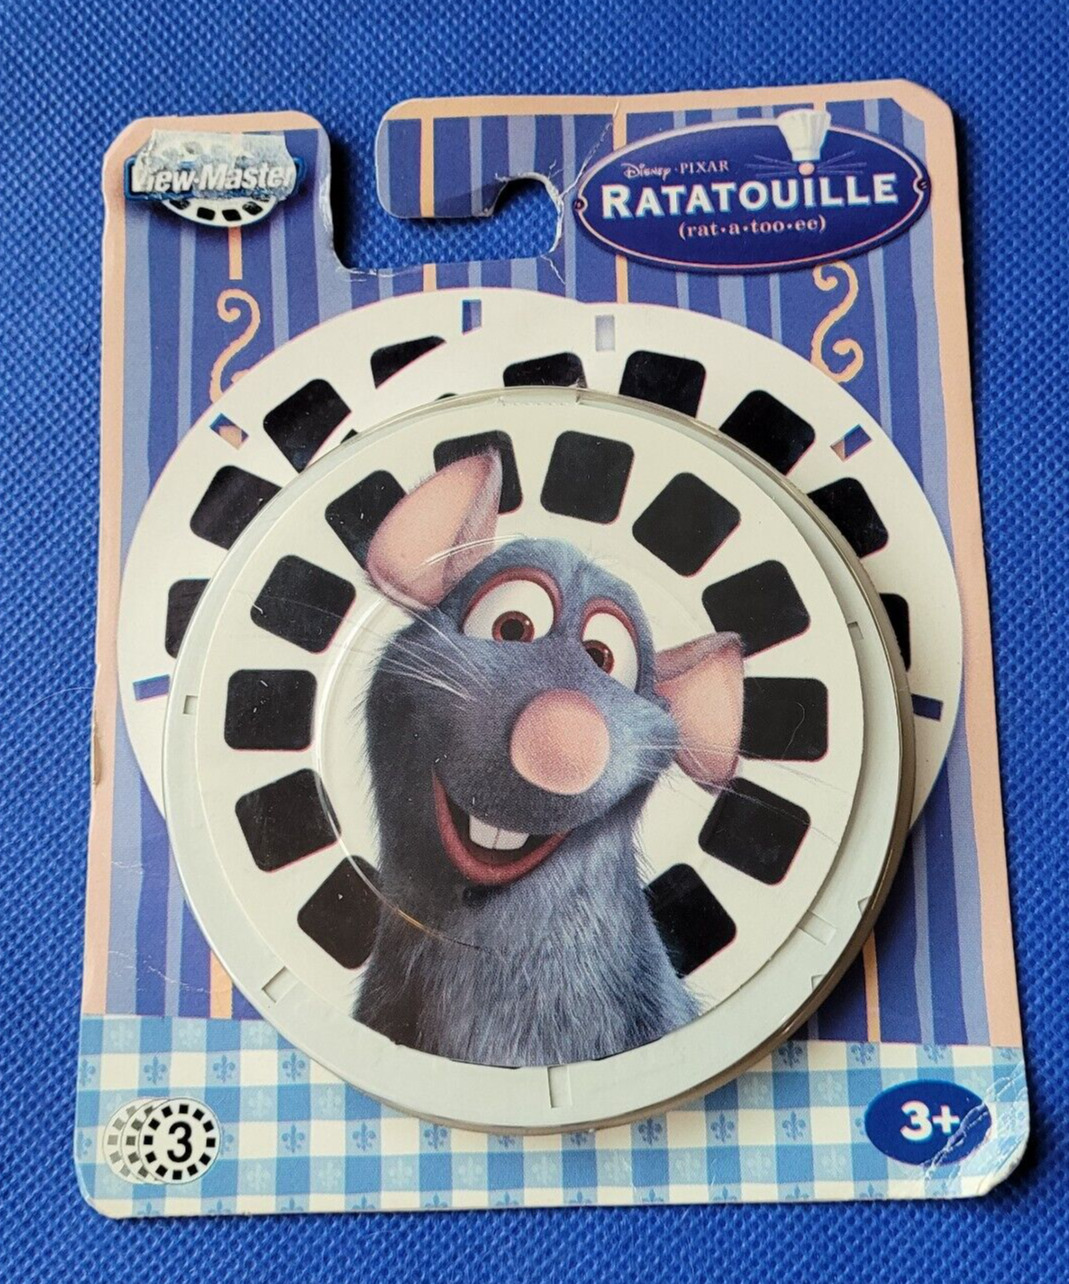 SEALED RARE Disney Disney's Pixar Ratatouille The Rat Chef view-master 3 Reels